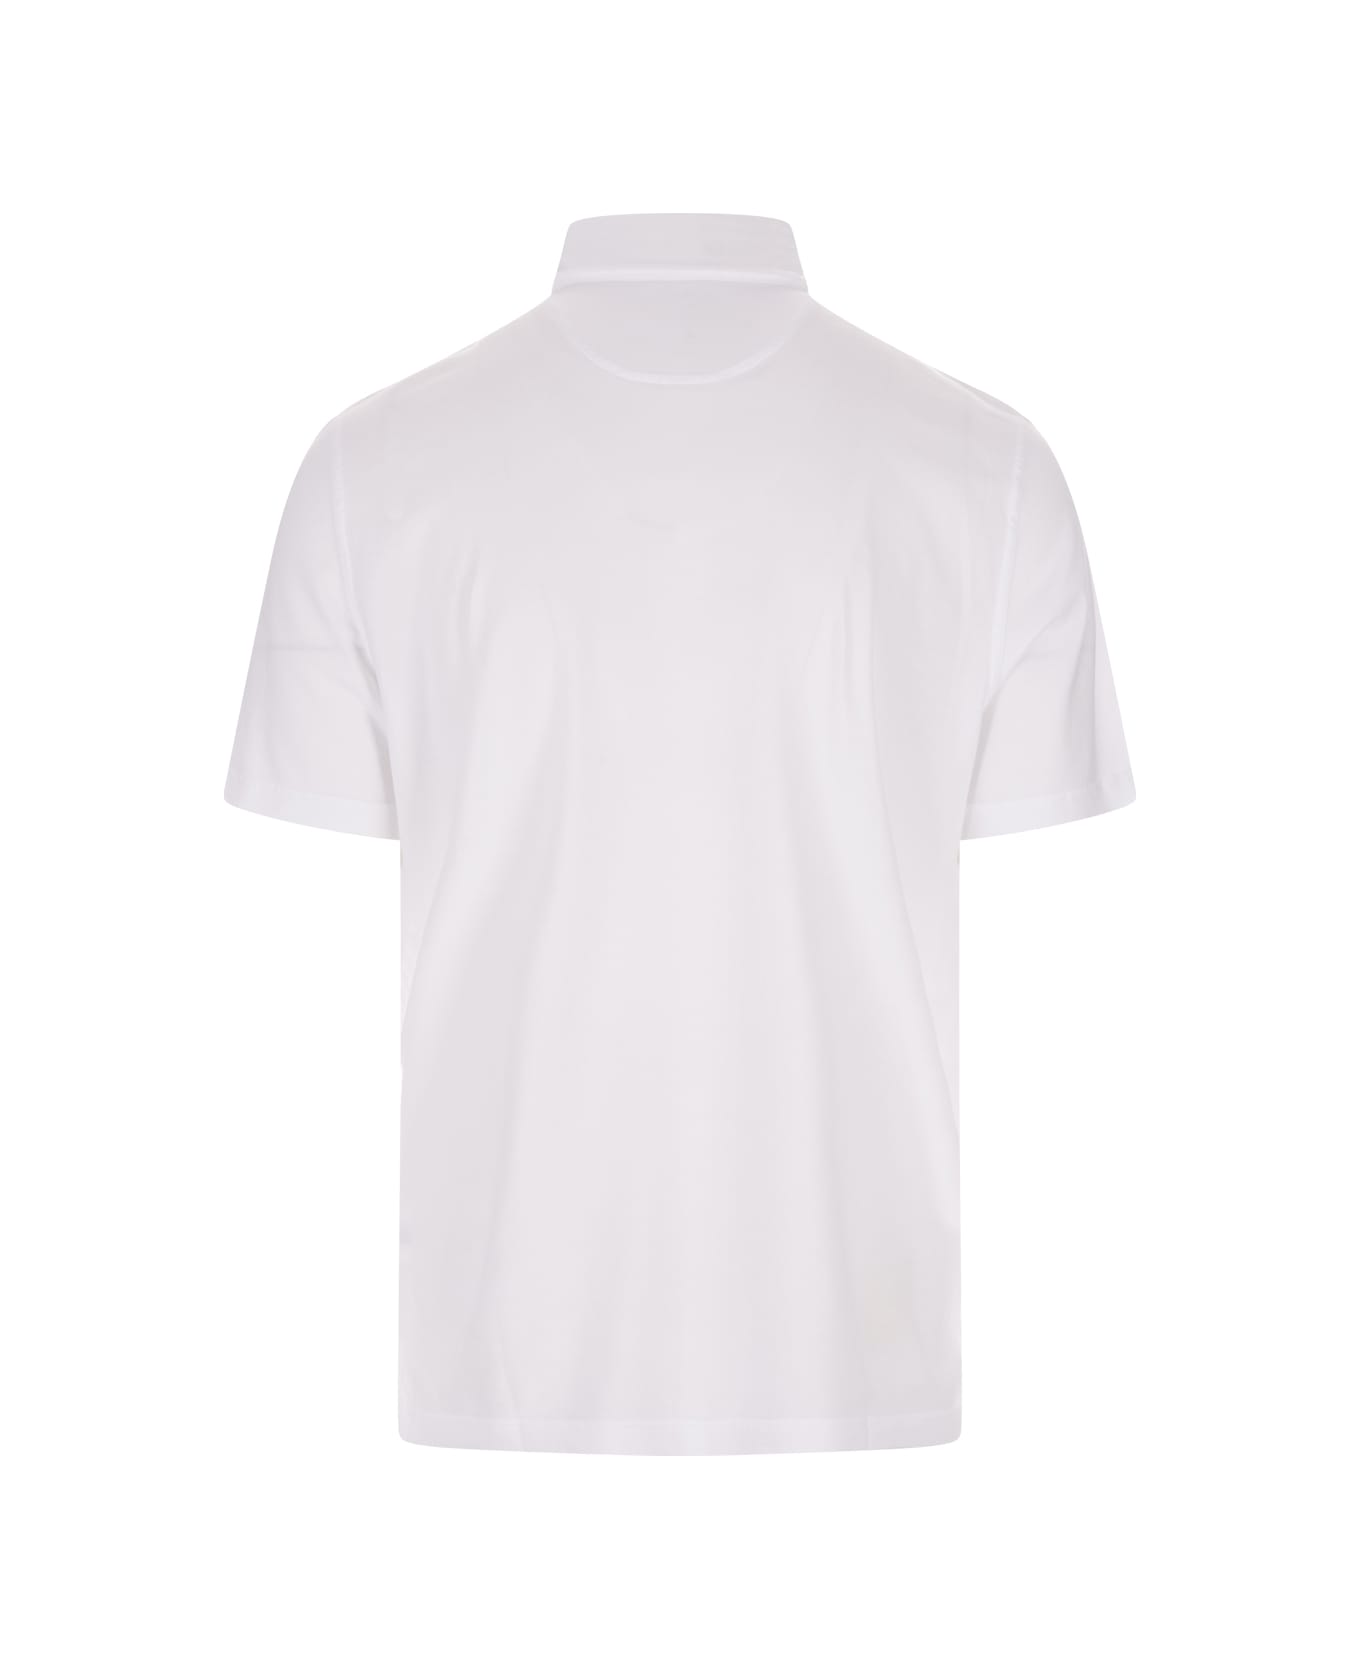 Fedeli White Polo Shirt In Organic Cotton - White ポロシャツ